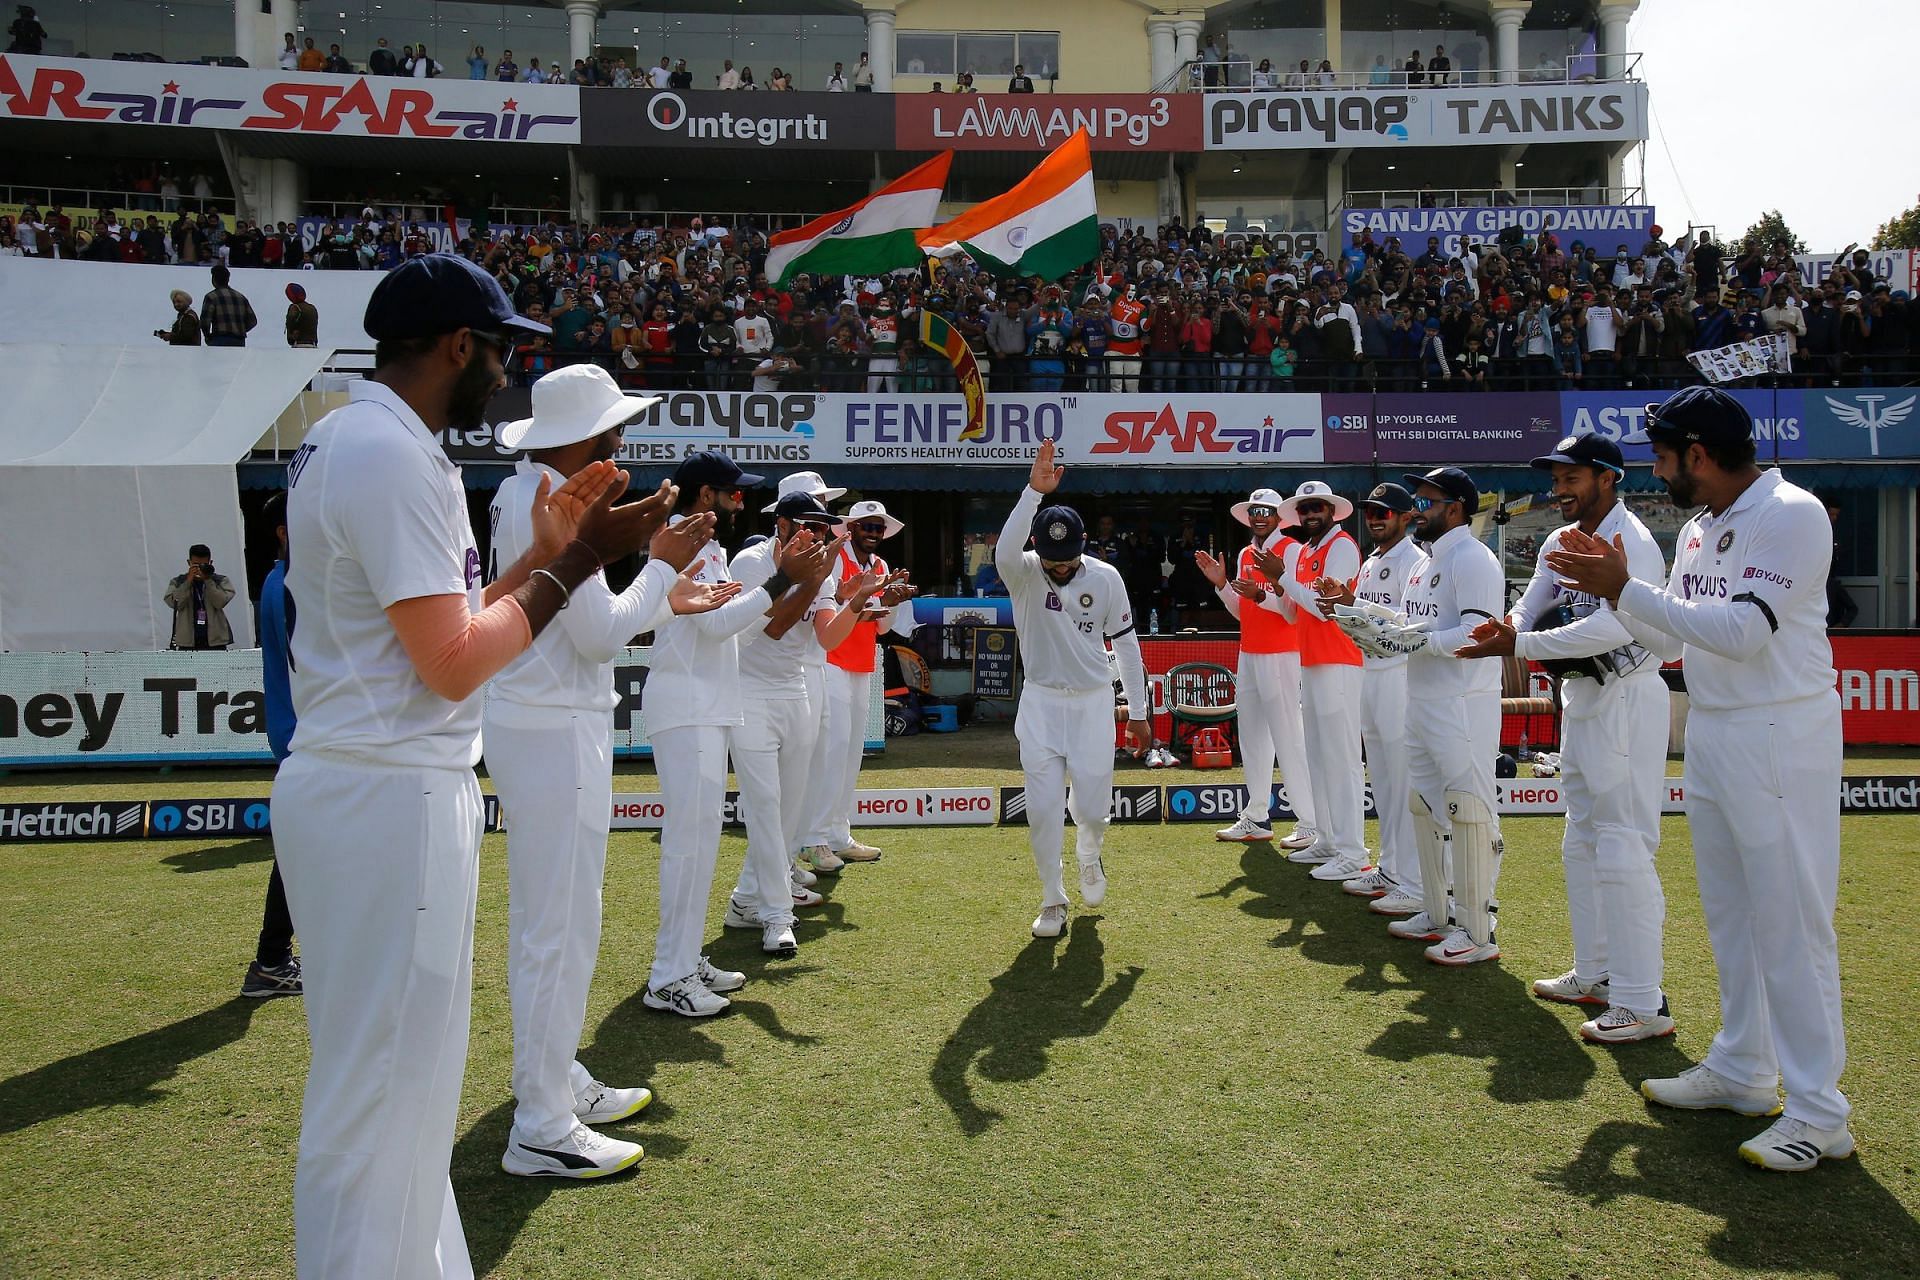 विराट कोहली को गार्ड ऑफ ऑनर देते भारतीय खिलाड़ी (Photo Credit: BCCI)